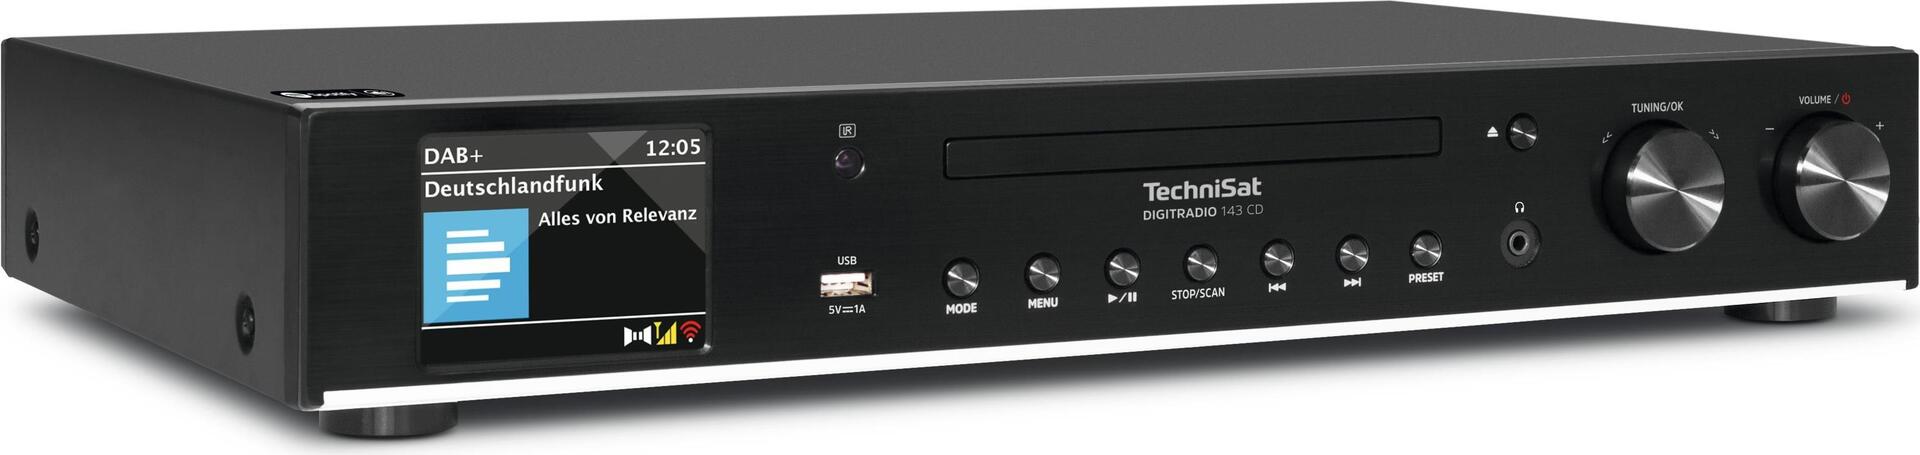 TechniSat DigitRadio 143 CD - Audiosystem - Schwarz (0000/3989)